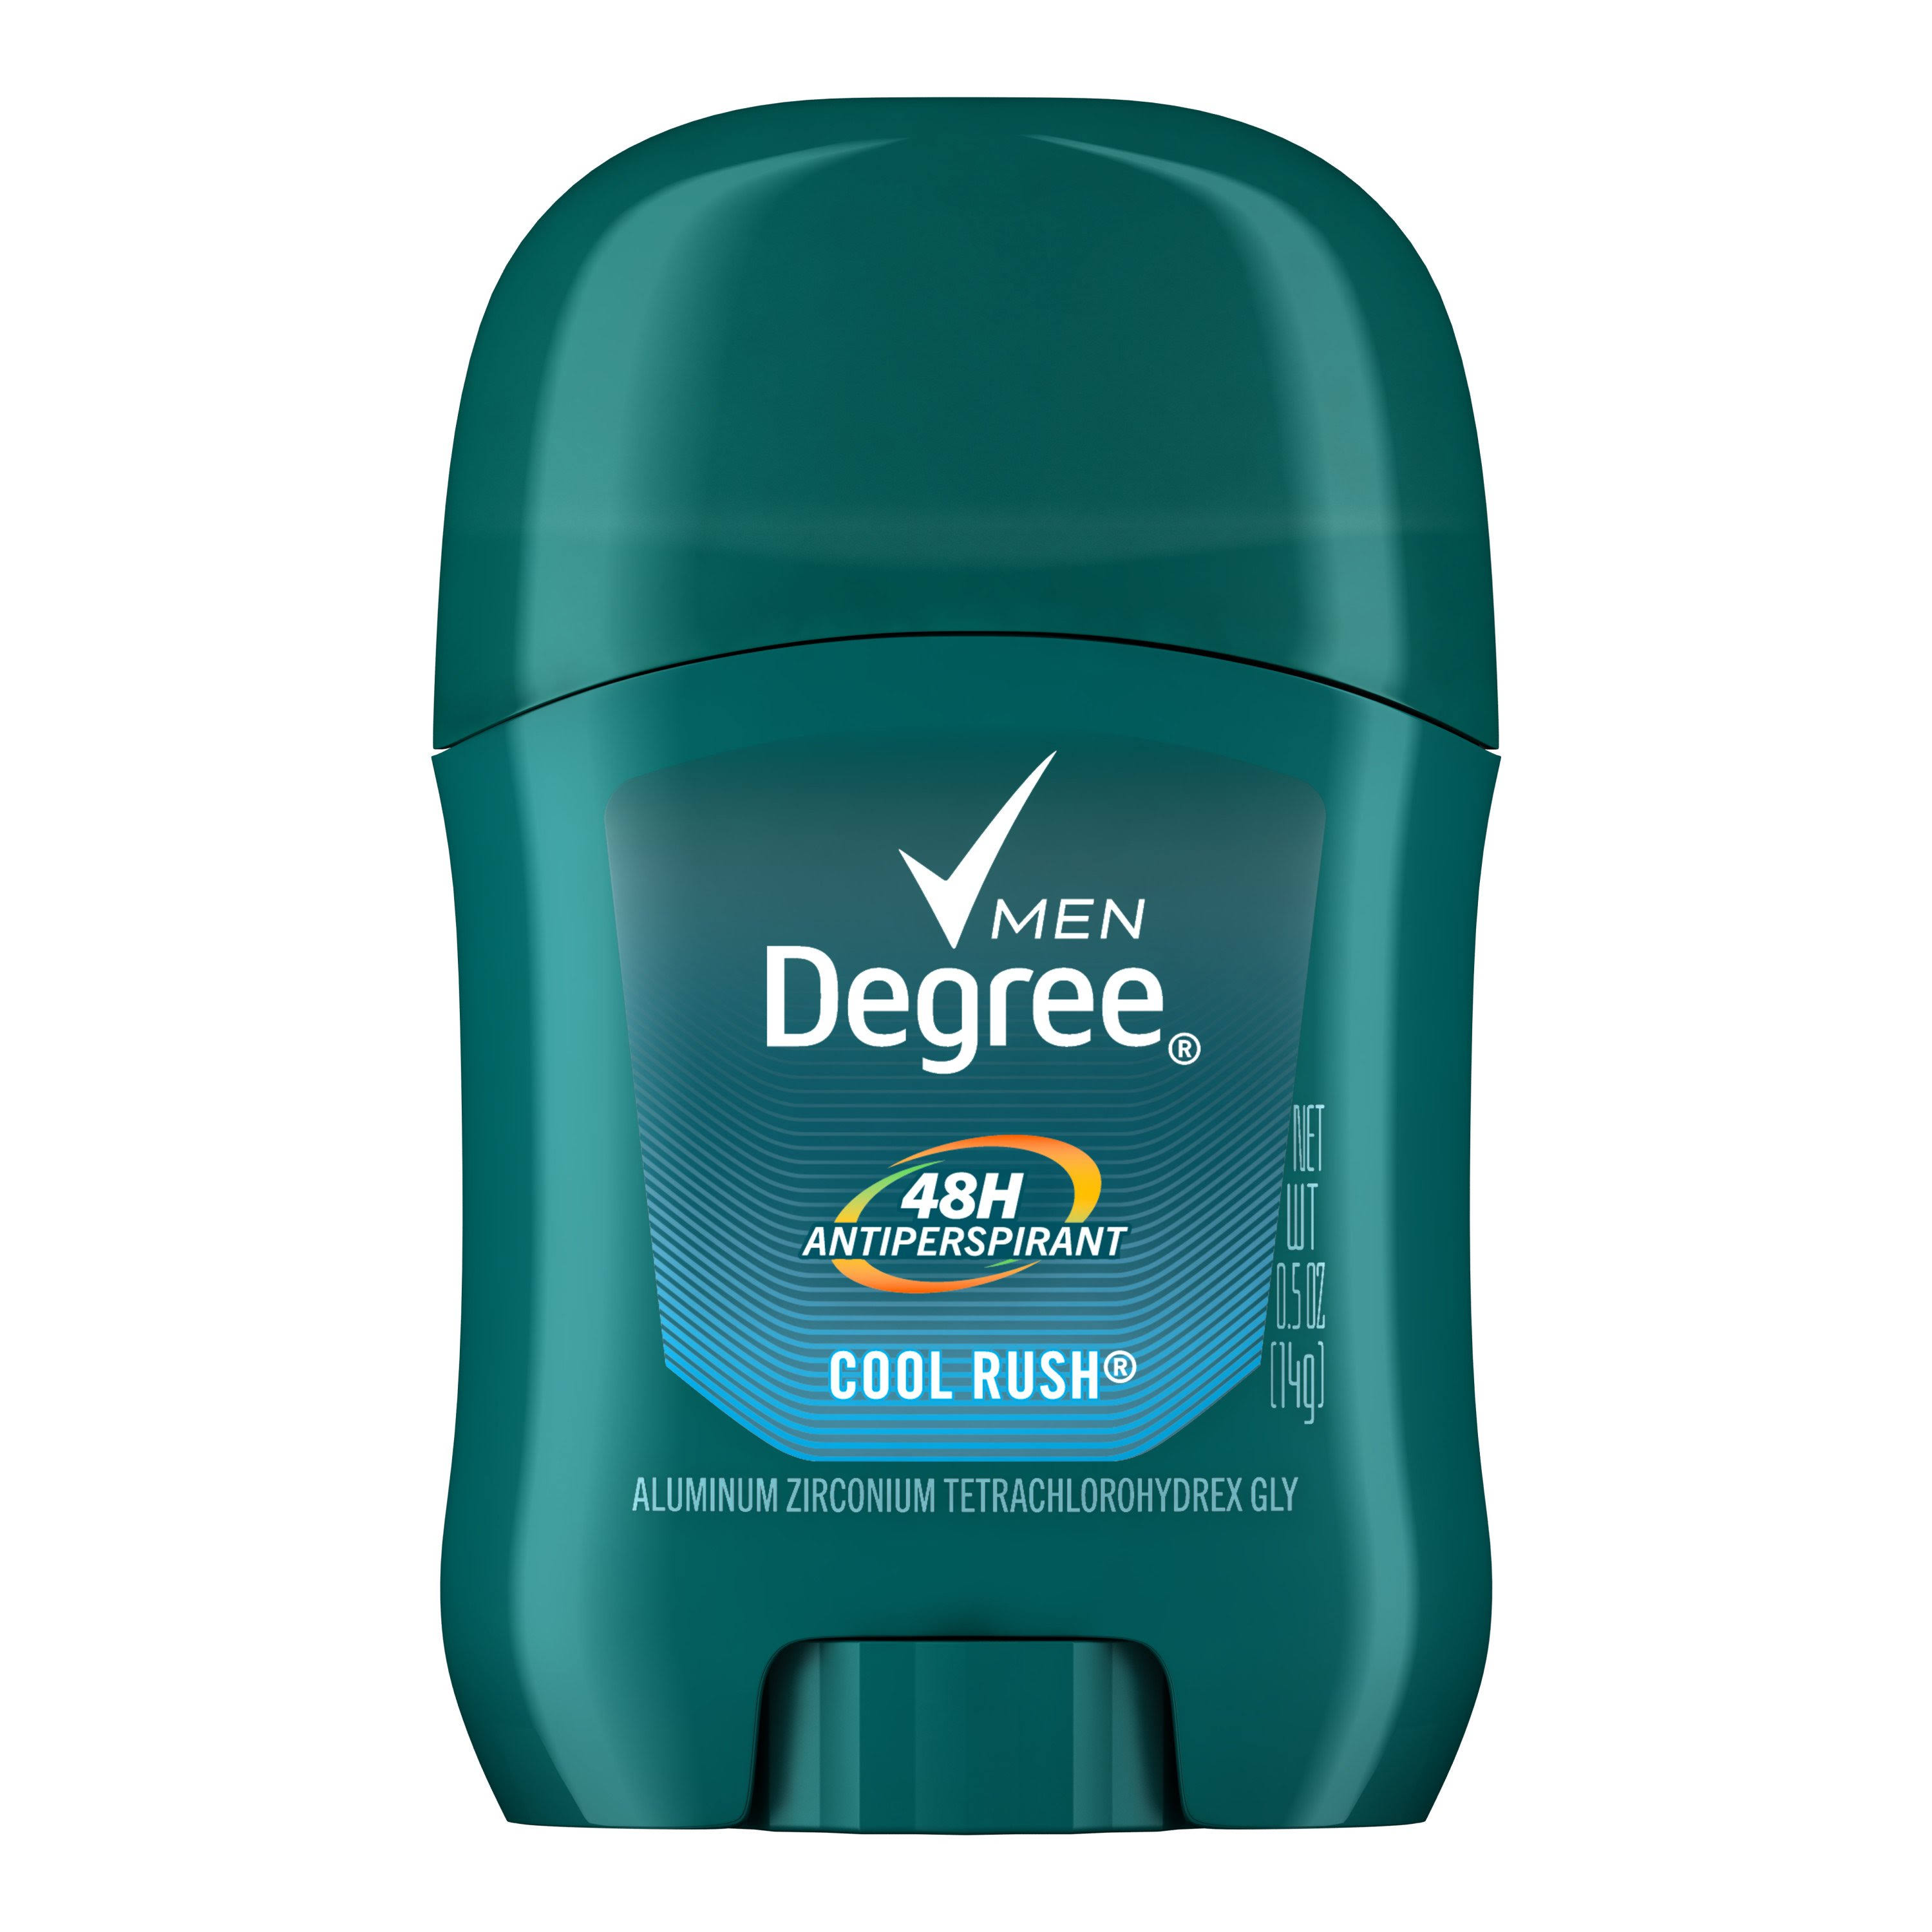 Degree Men Dry Protection Anti-Perspirant - Cool Rush, 14g